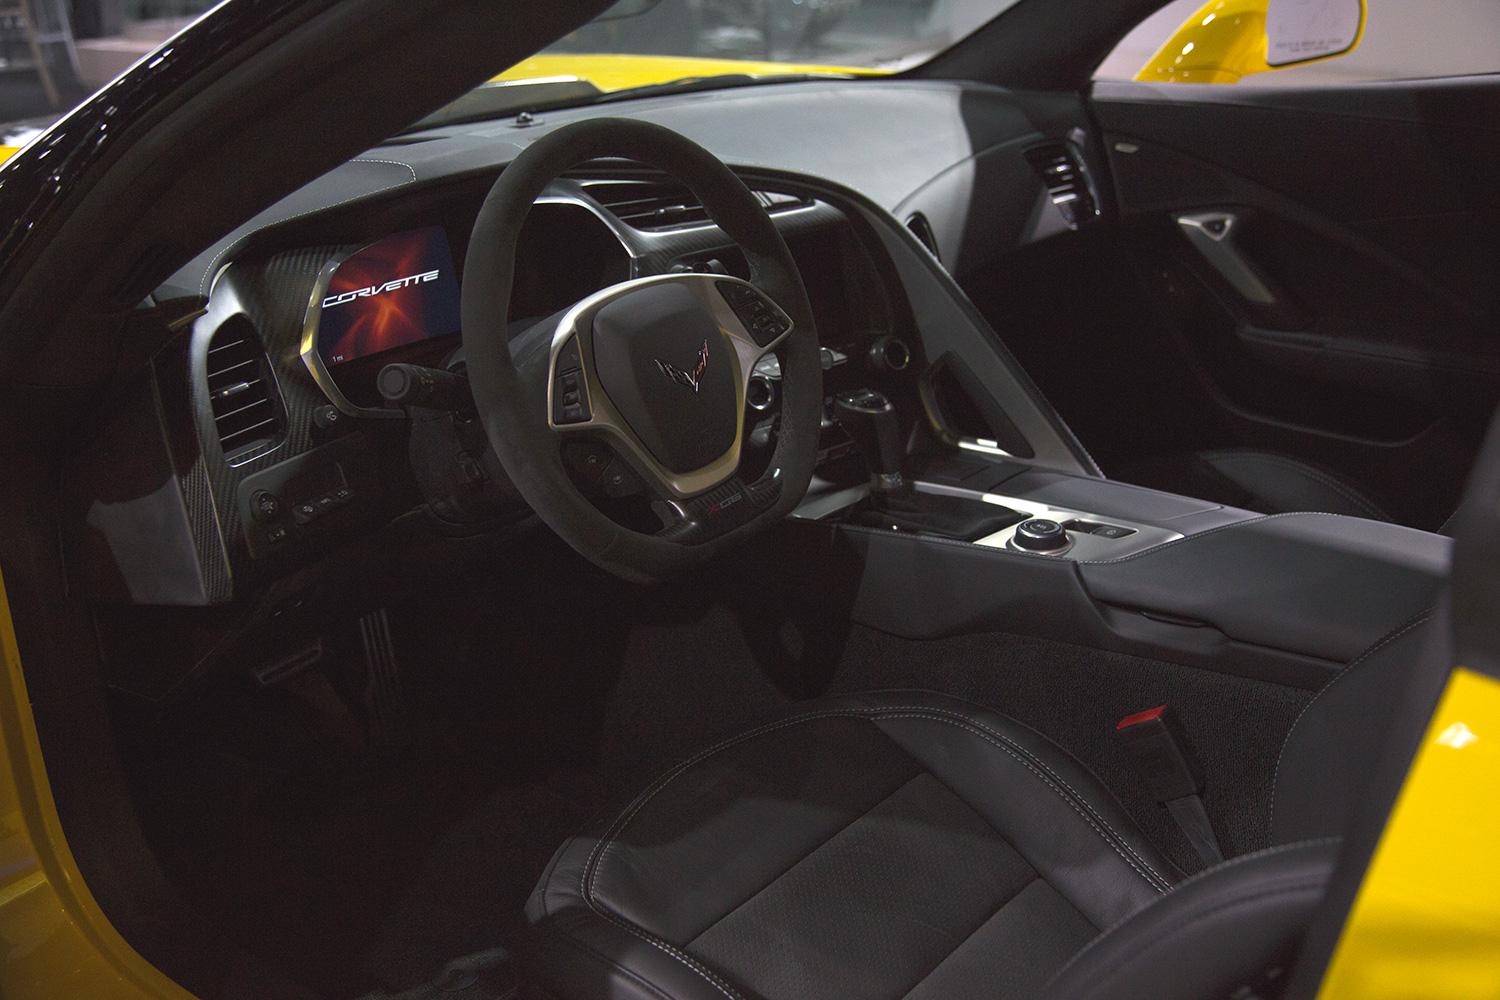 2015 Chevrolet Corvette Z06 interior front